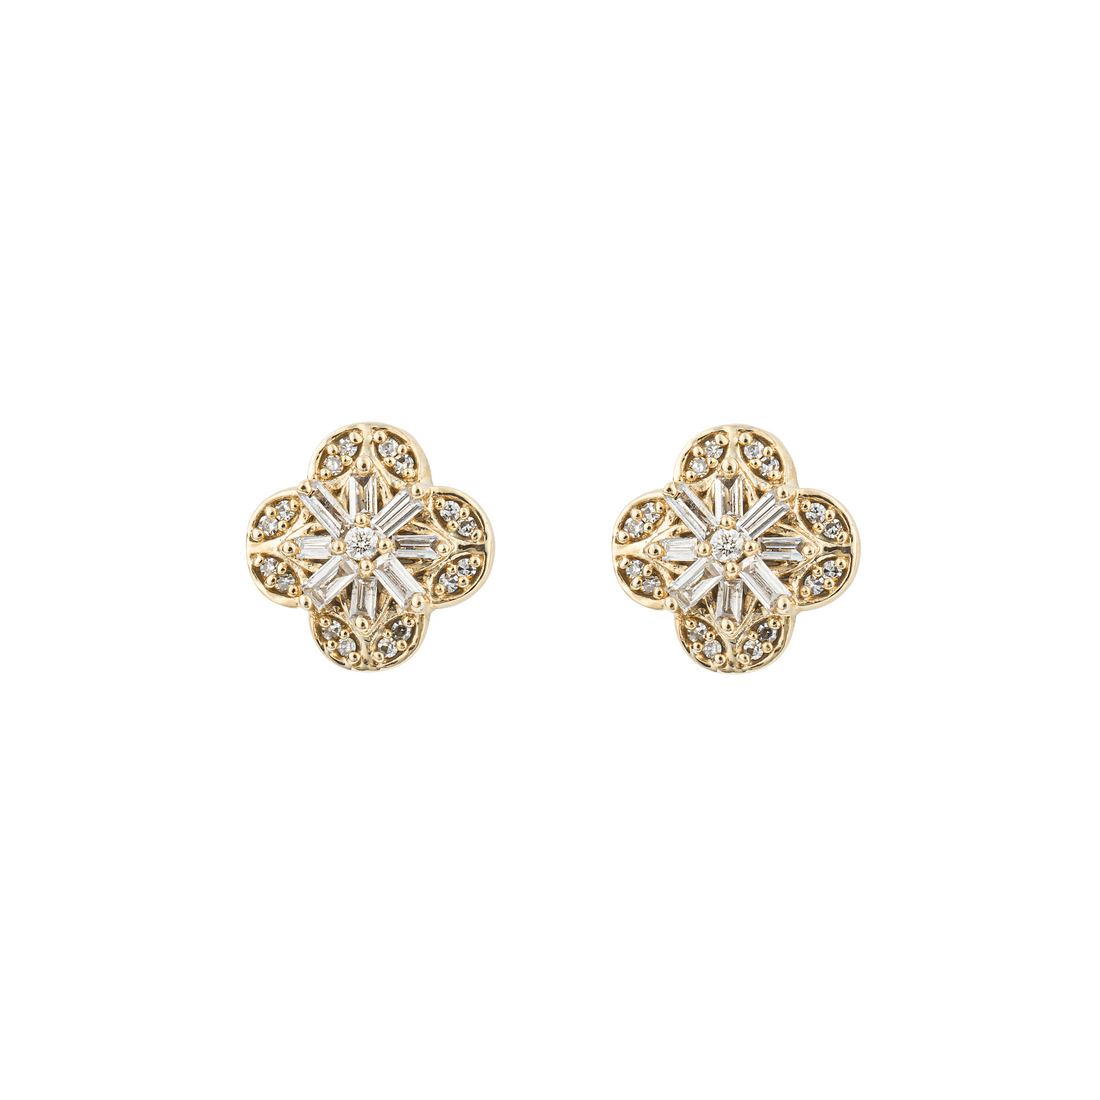 Flower Stud Earrings with Diamond in 9ct Yellow Gold - Robert Anthony Jewellers, Edinburgh